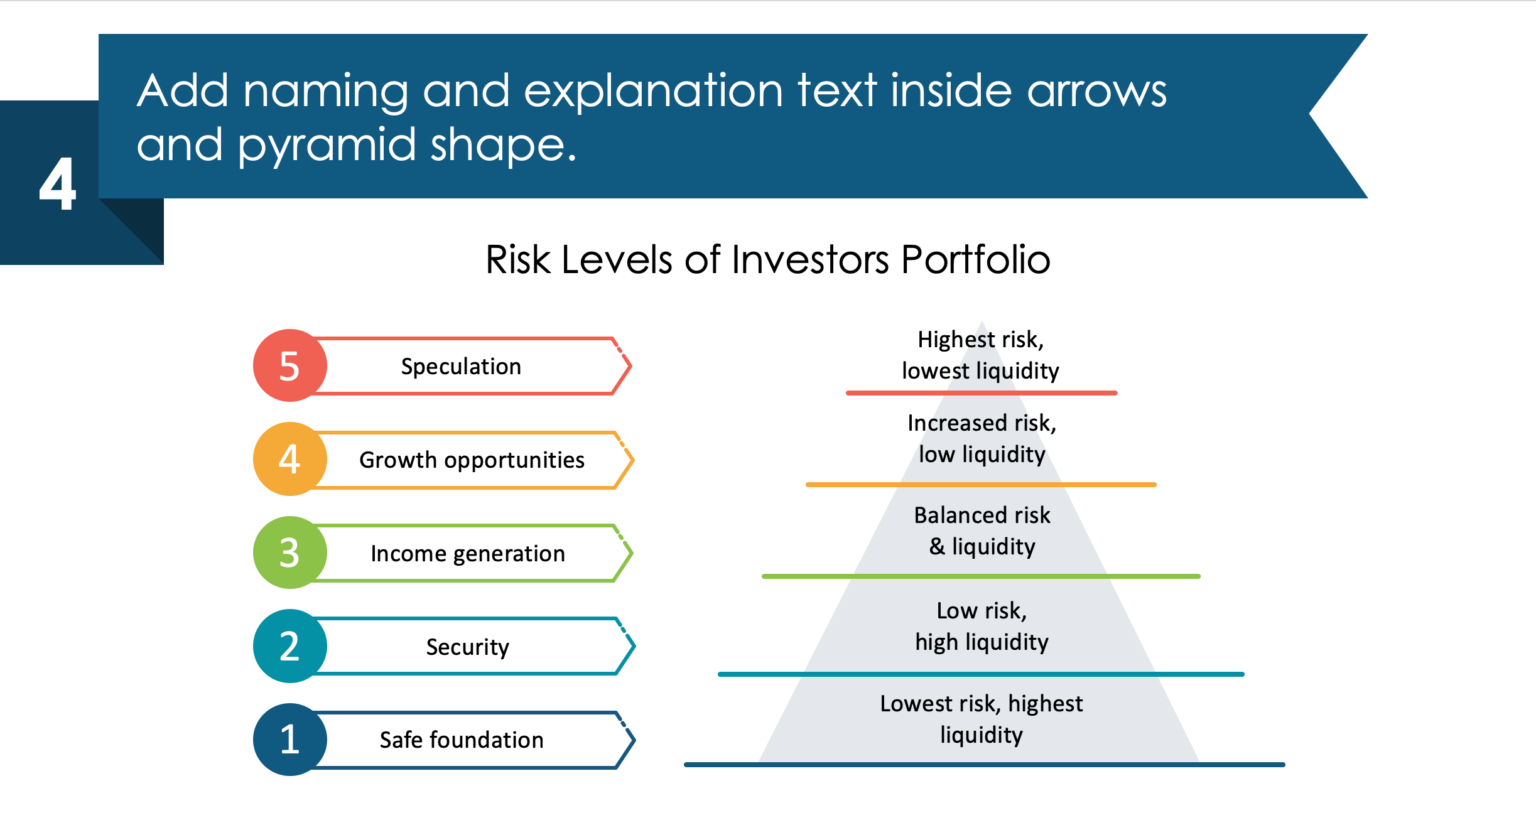 risk levels of investors portfolio step 4